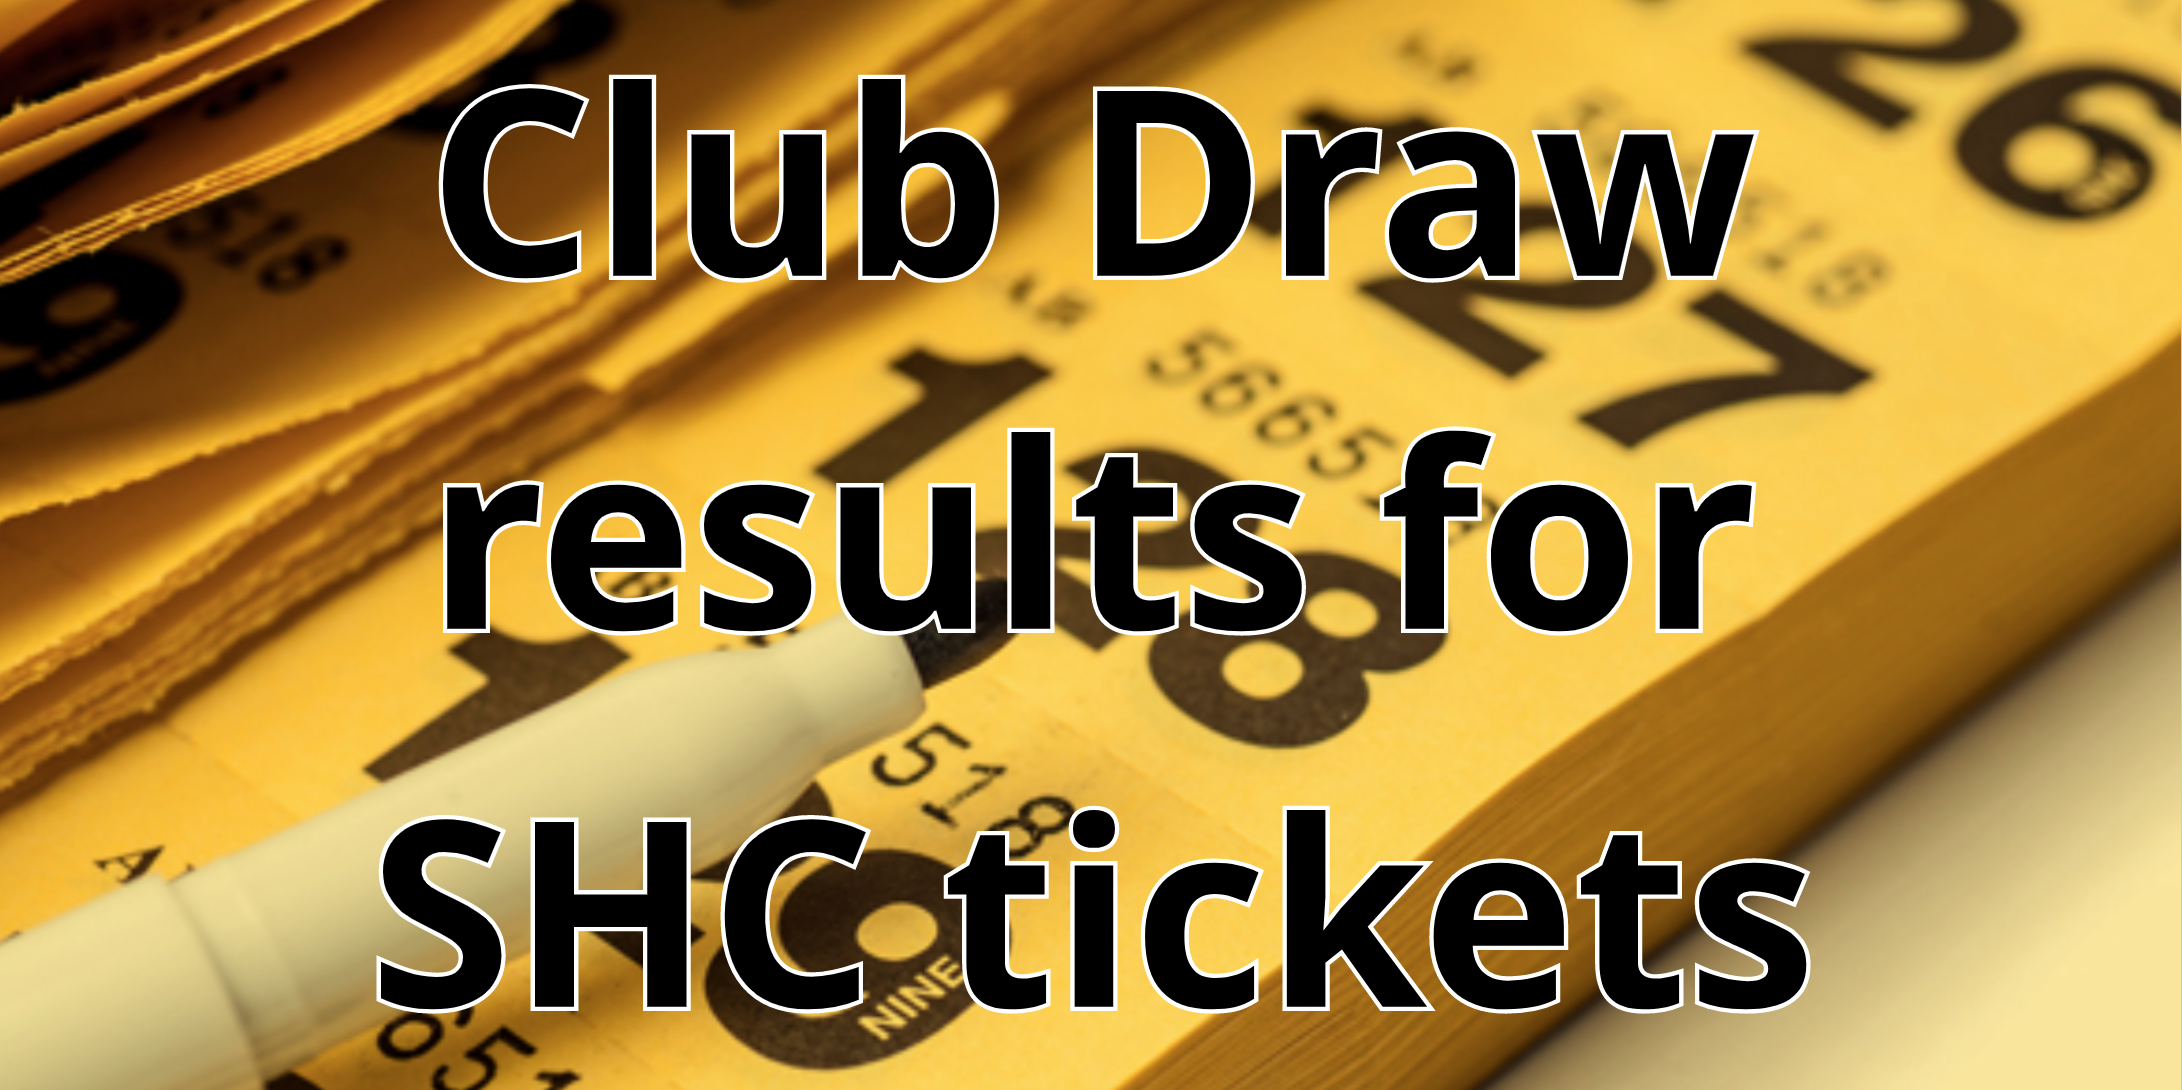 Down GAA SHC Club ticket allocation list and arrangements